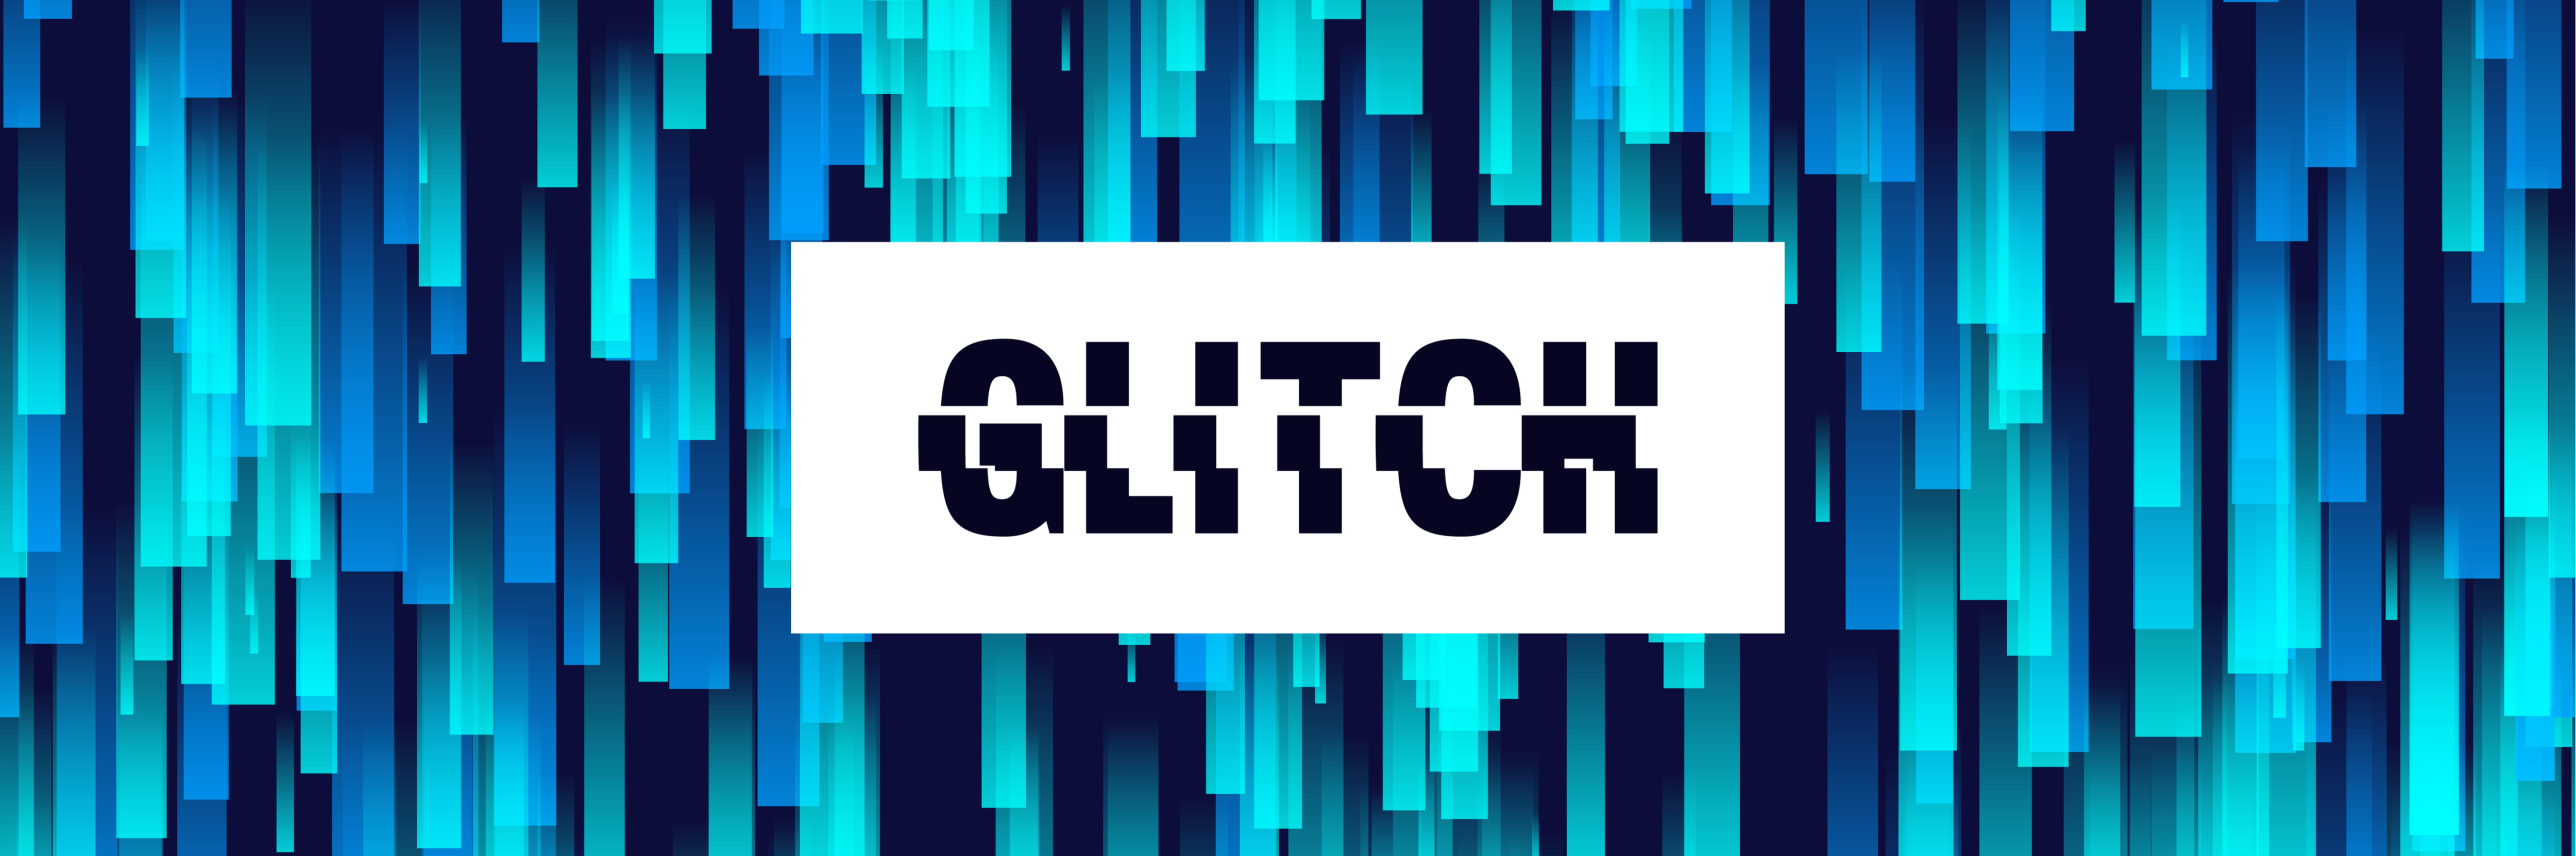 Glitch List - main image